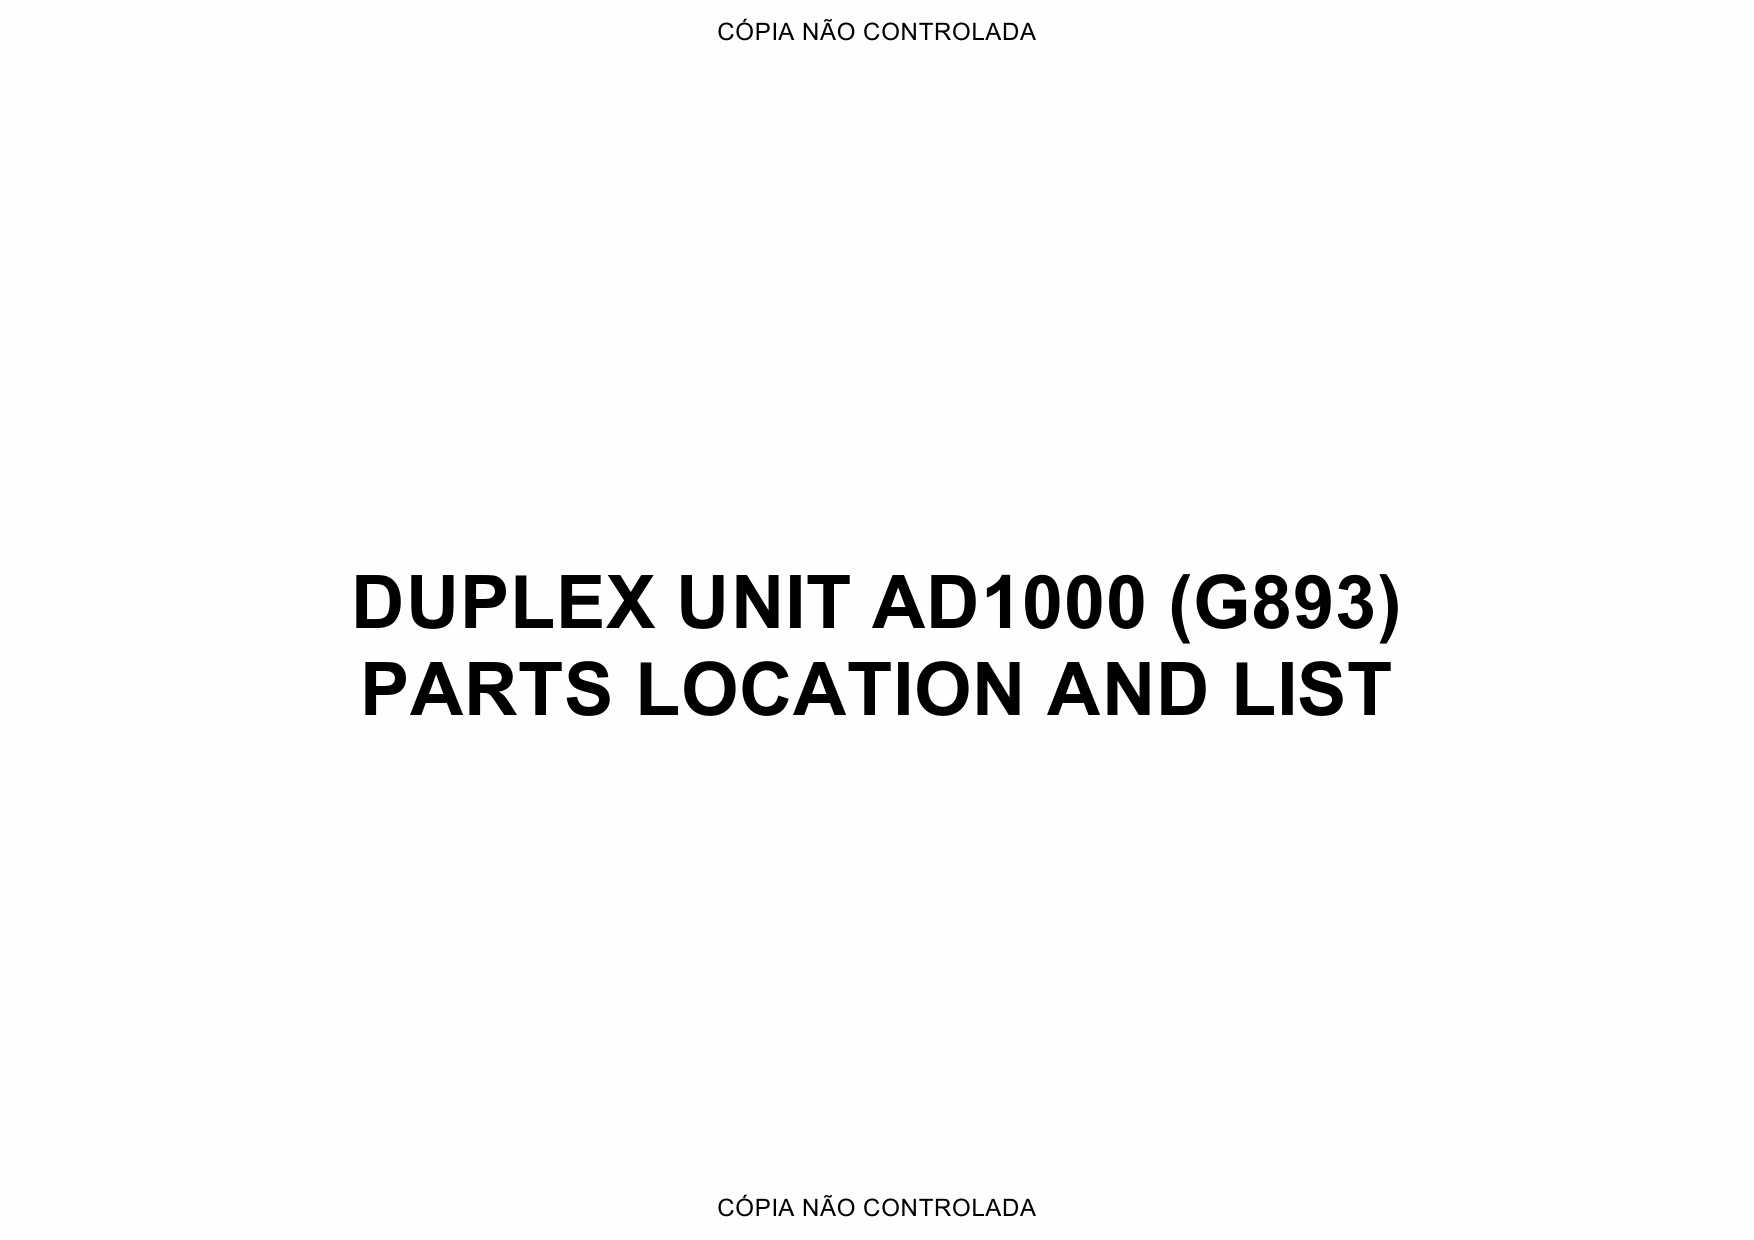 RICOH Options SR90b G893 DUPLEX-UNIT-AD1000 Parts Catalog PDF download-1